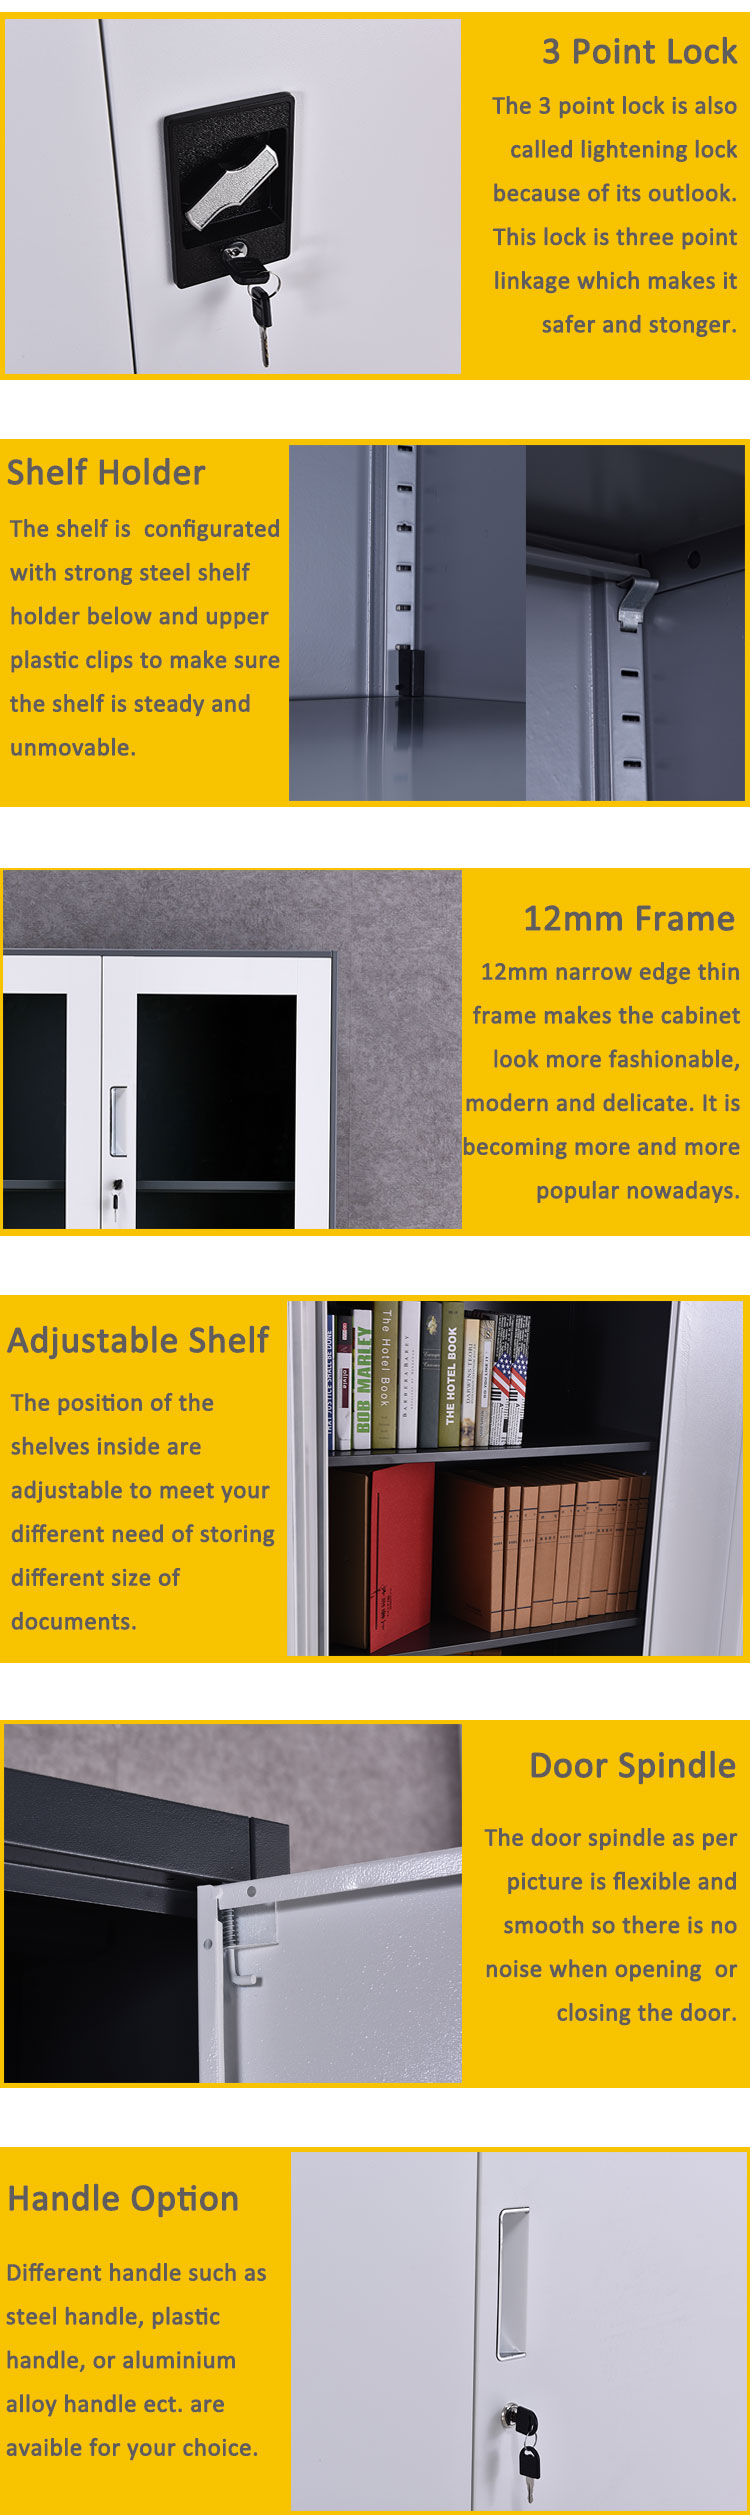 Luoyang Furnitopper Double Glass Door Steel Metal Storage Living Room Cabinet Metal Cabinet